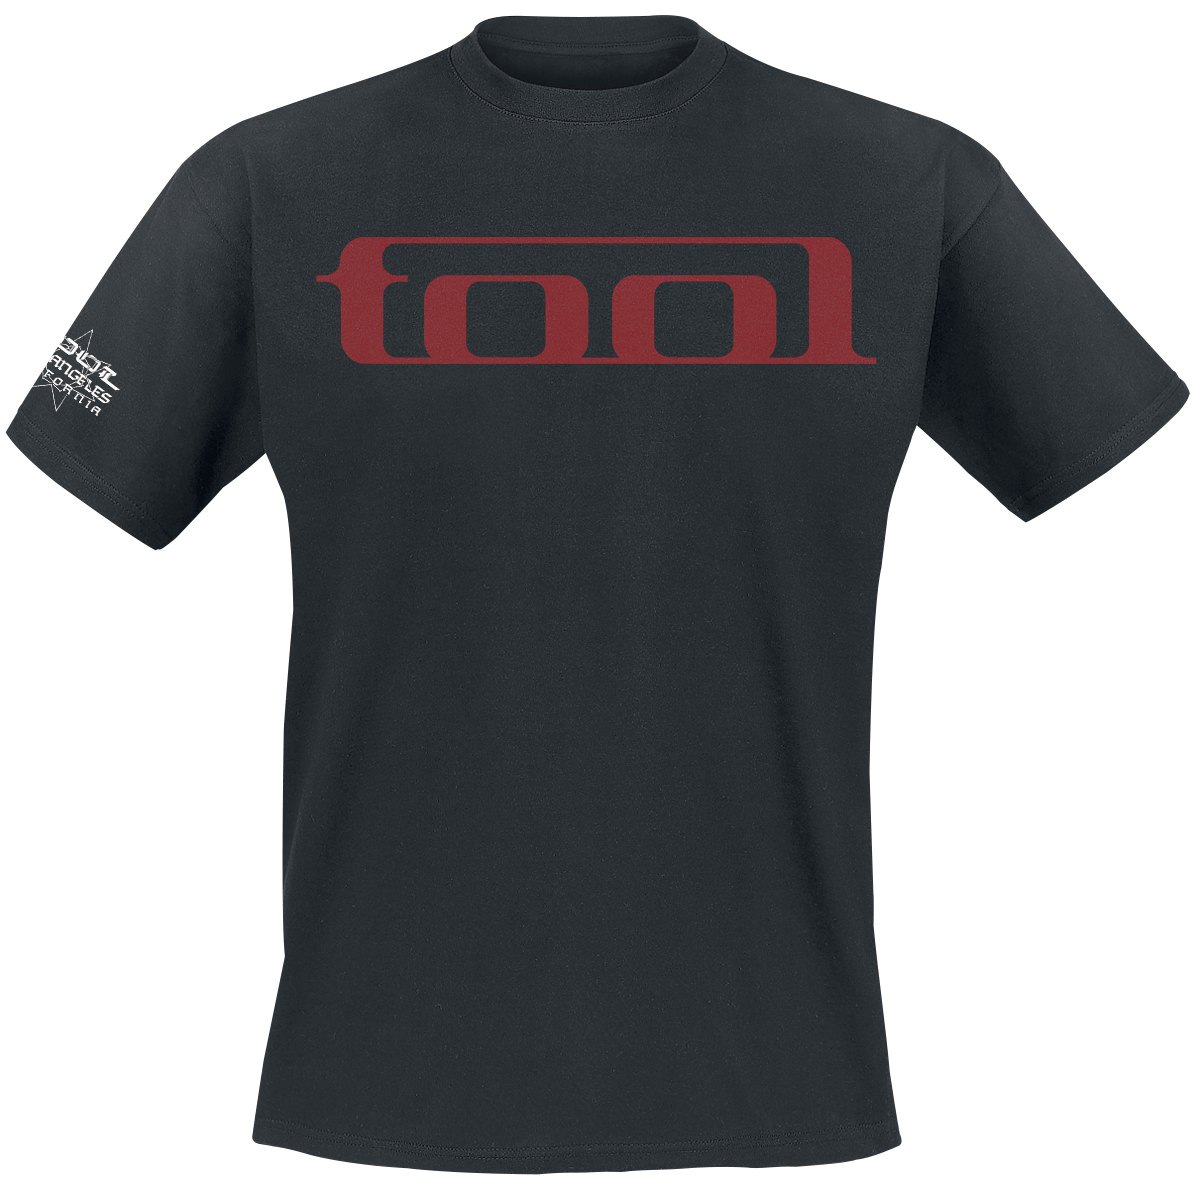 Tool - Undertow - T-Shirt - schwarz